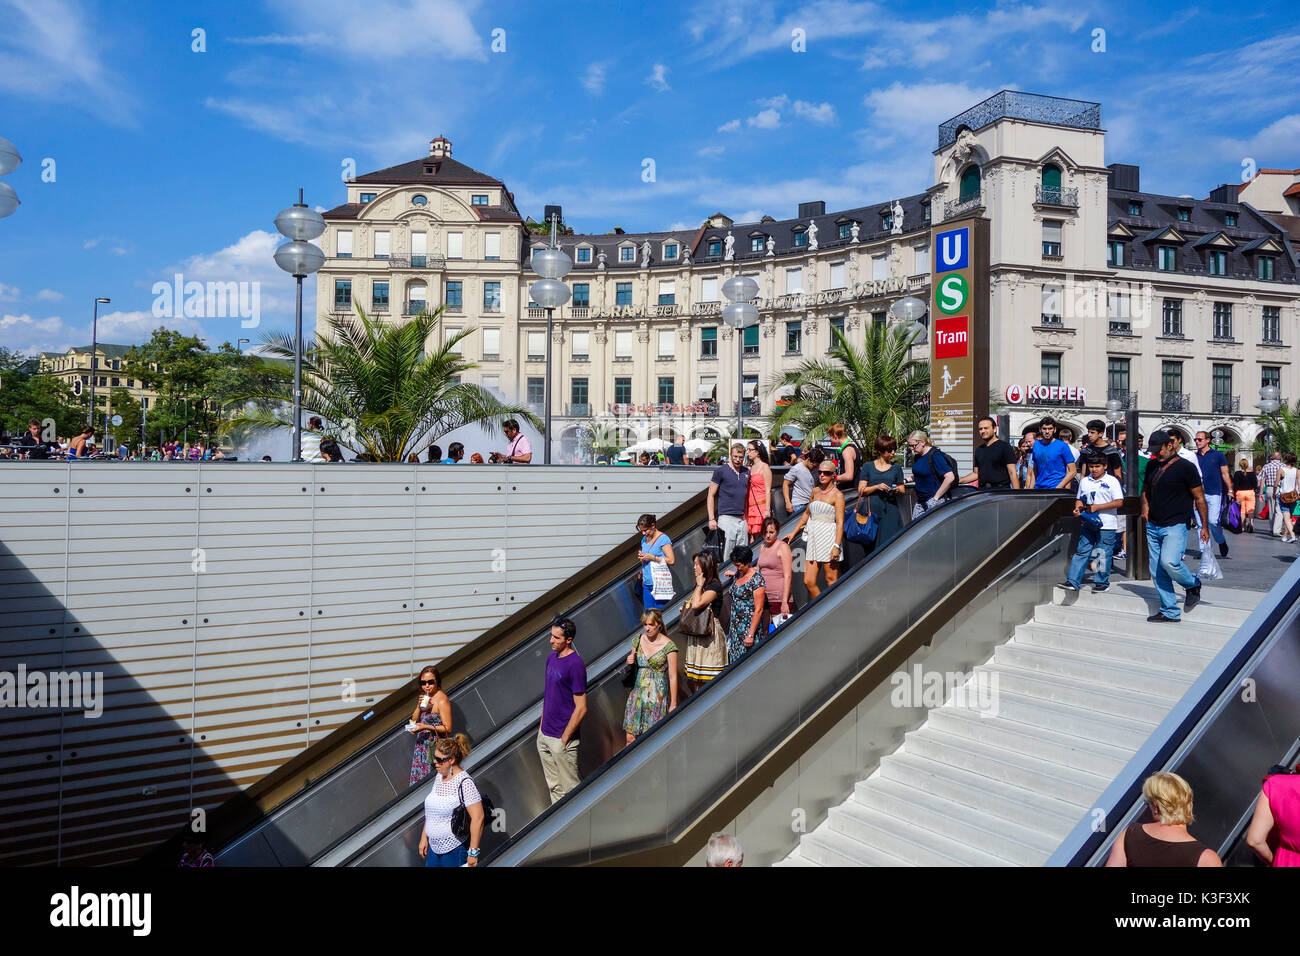 Escalator con passanti sulla Karlsplatz (quadrato), Stachus, Monaco di Baviera, Germania Foto Stock